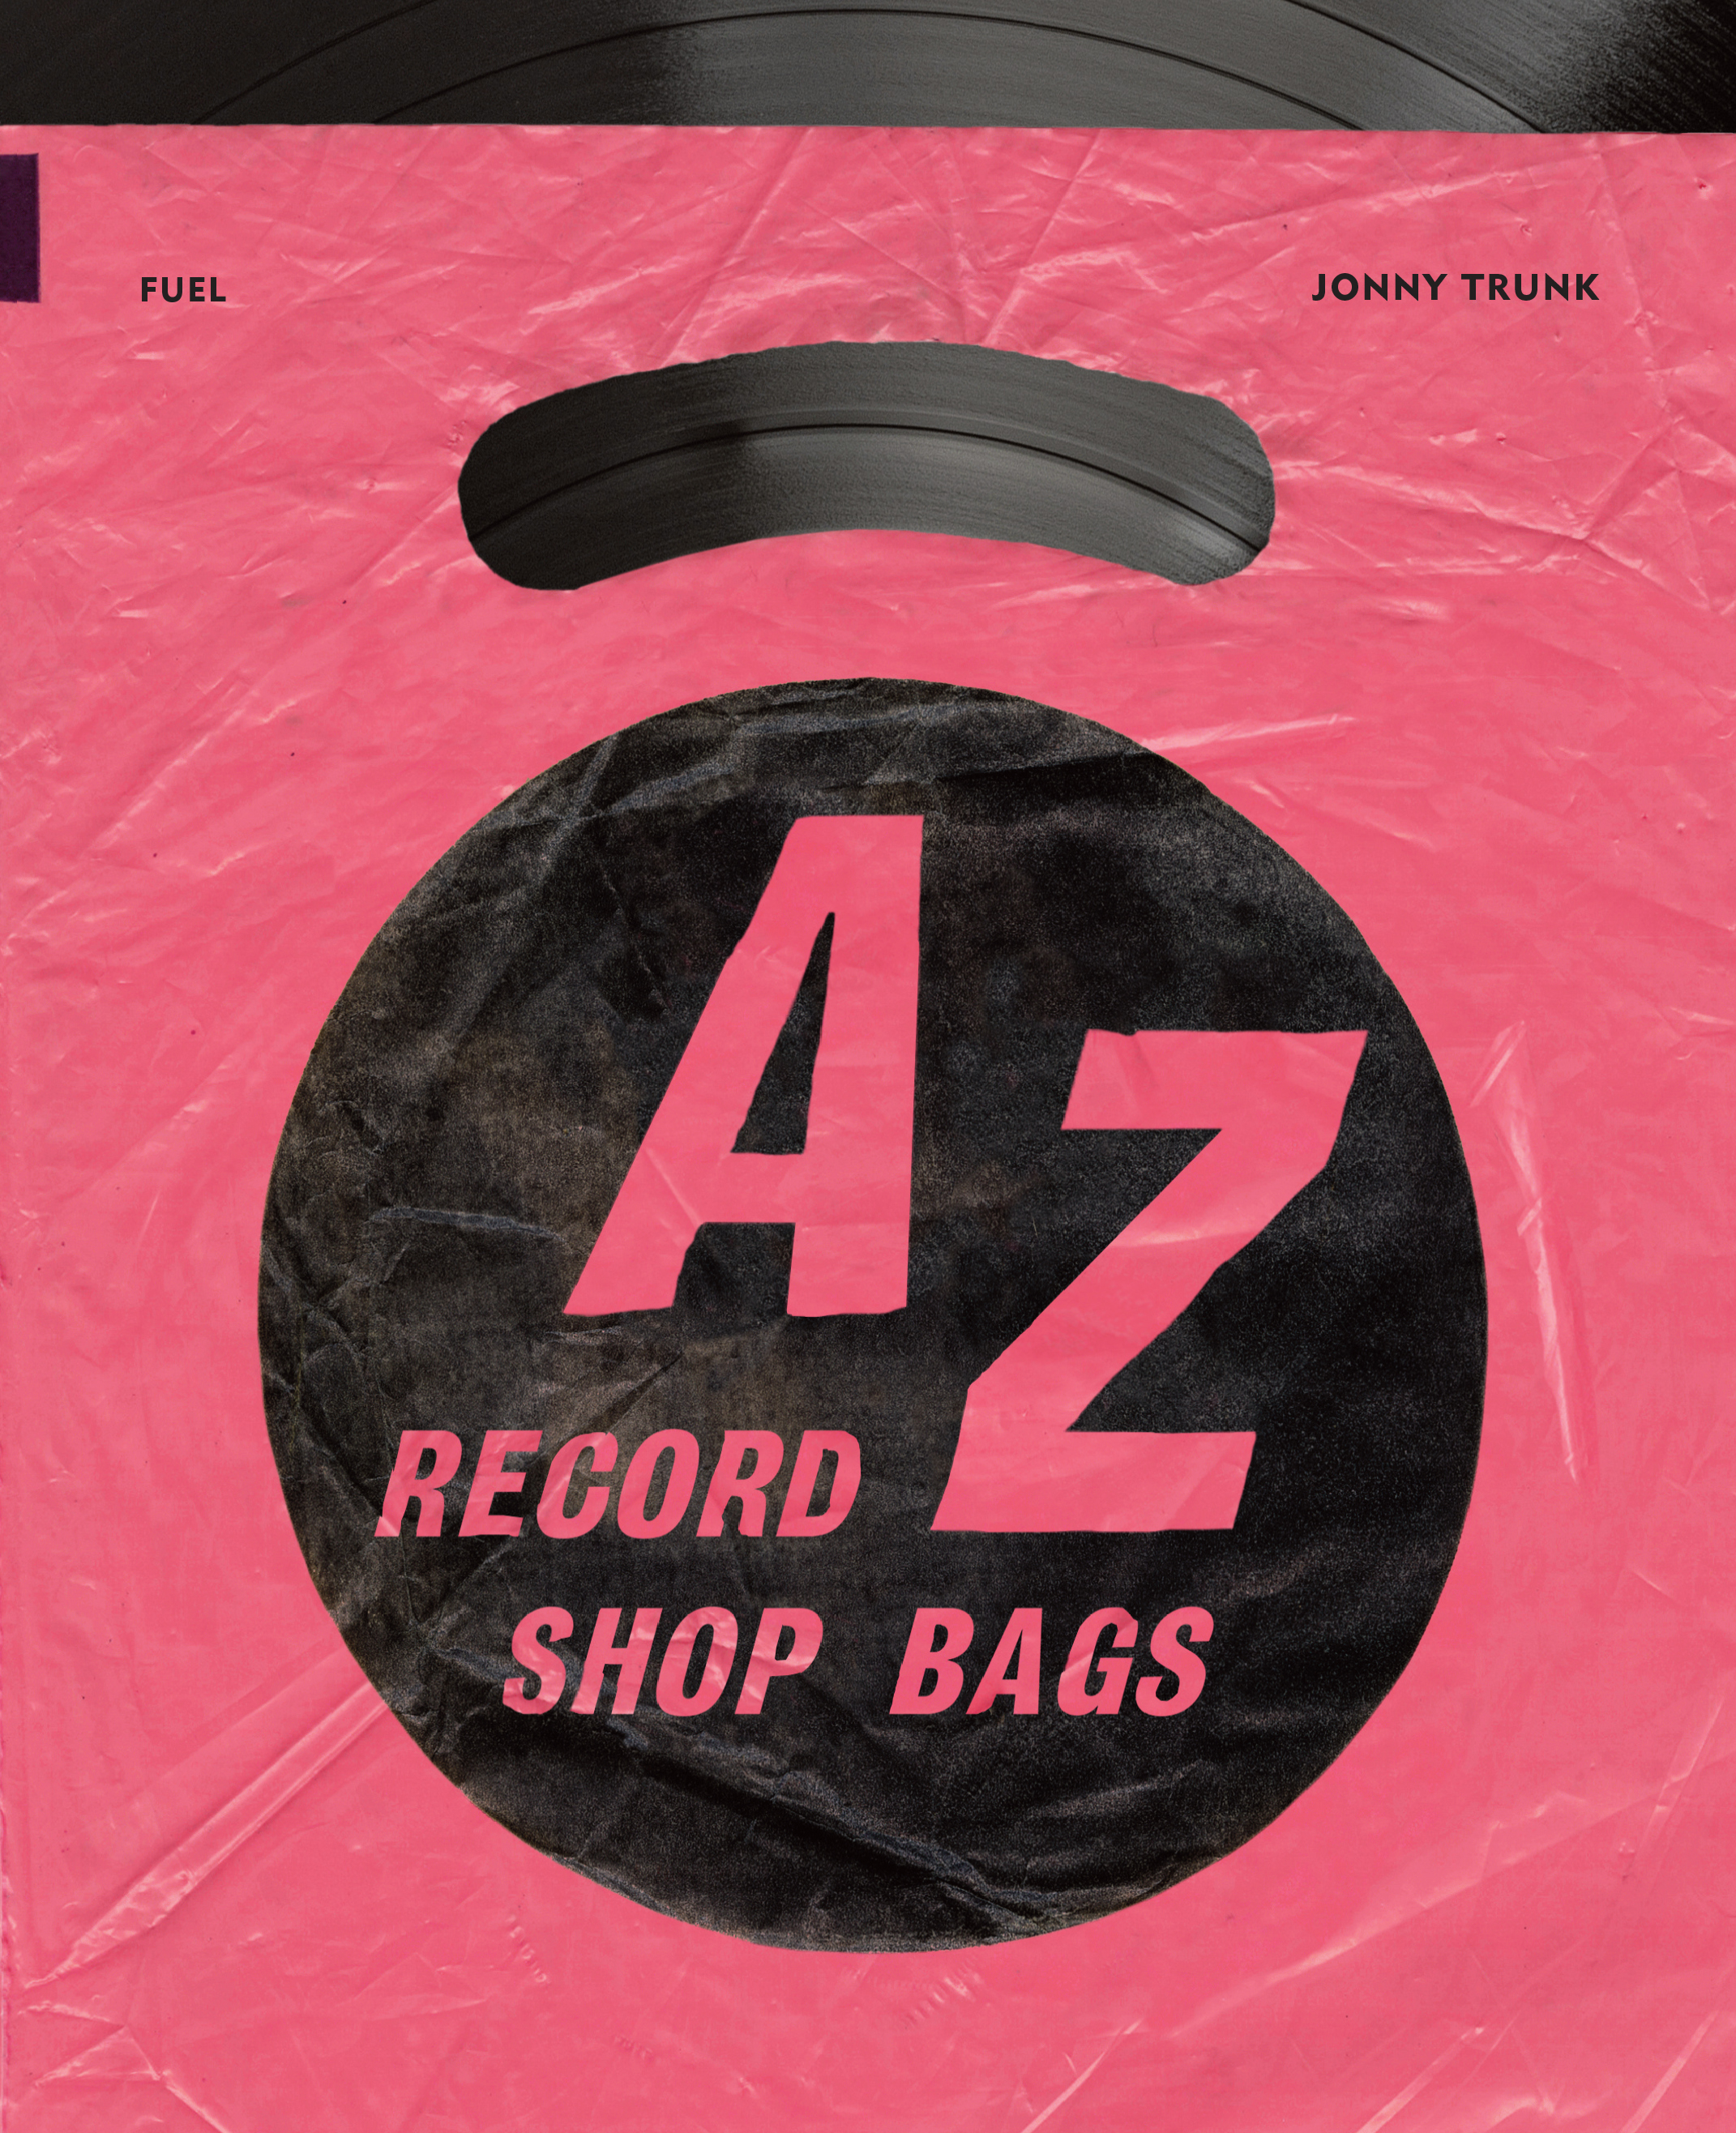 Exclusive Record Tote Bag by Vinyl Consumption Record Shop